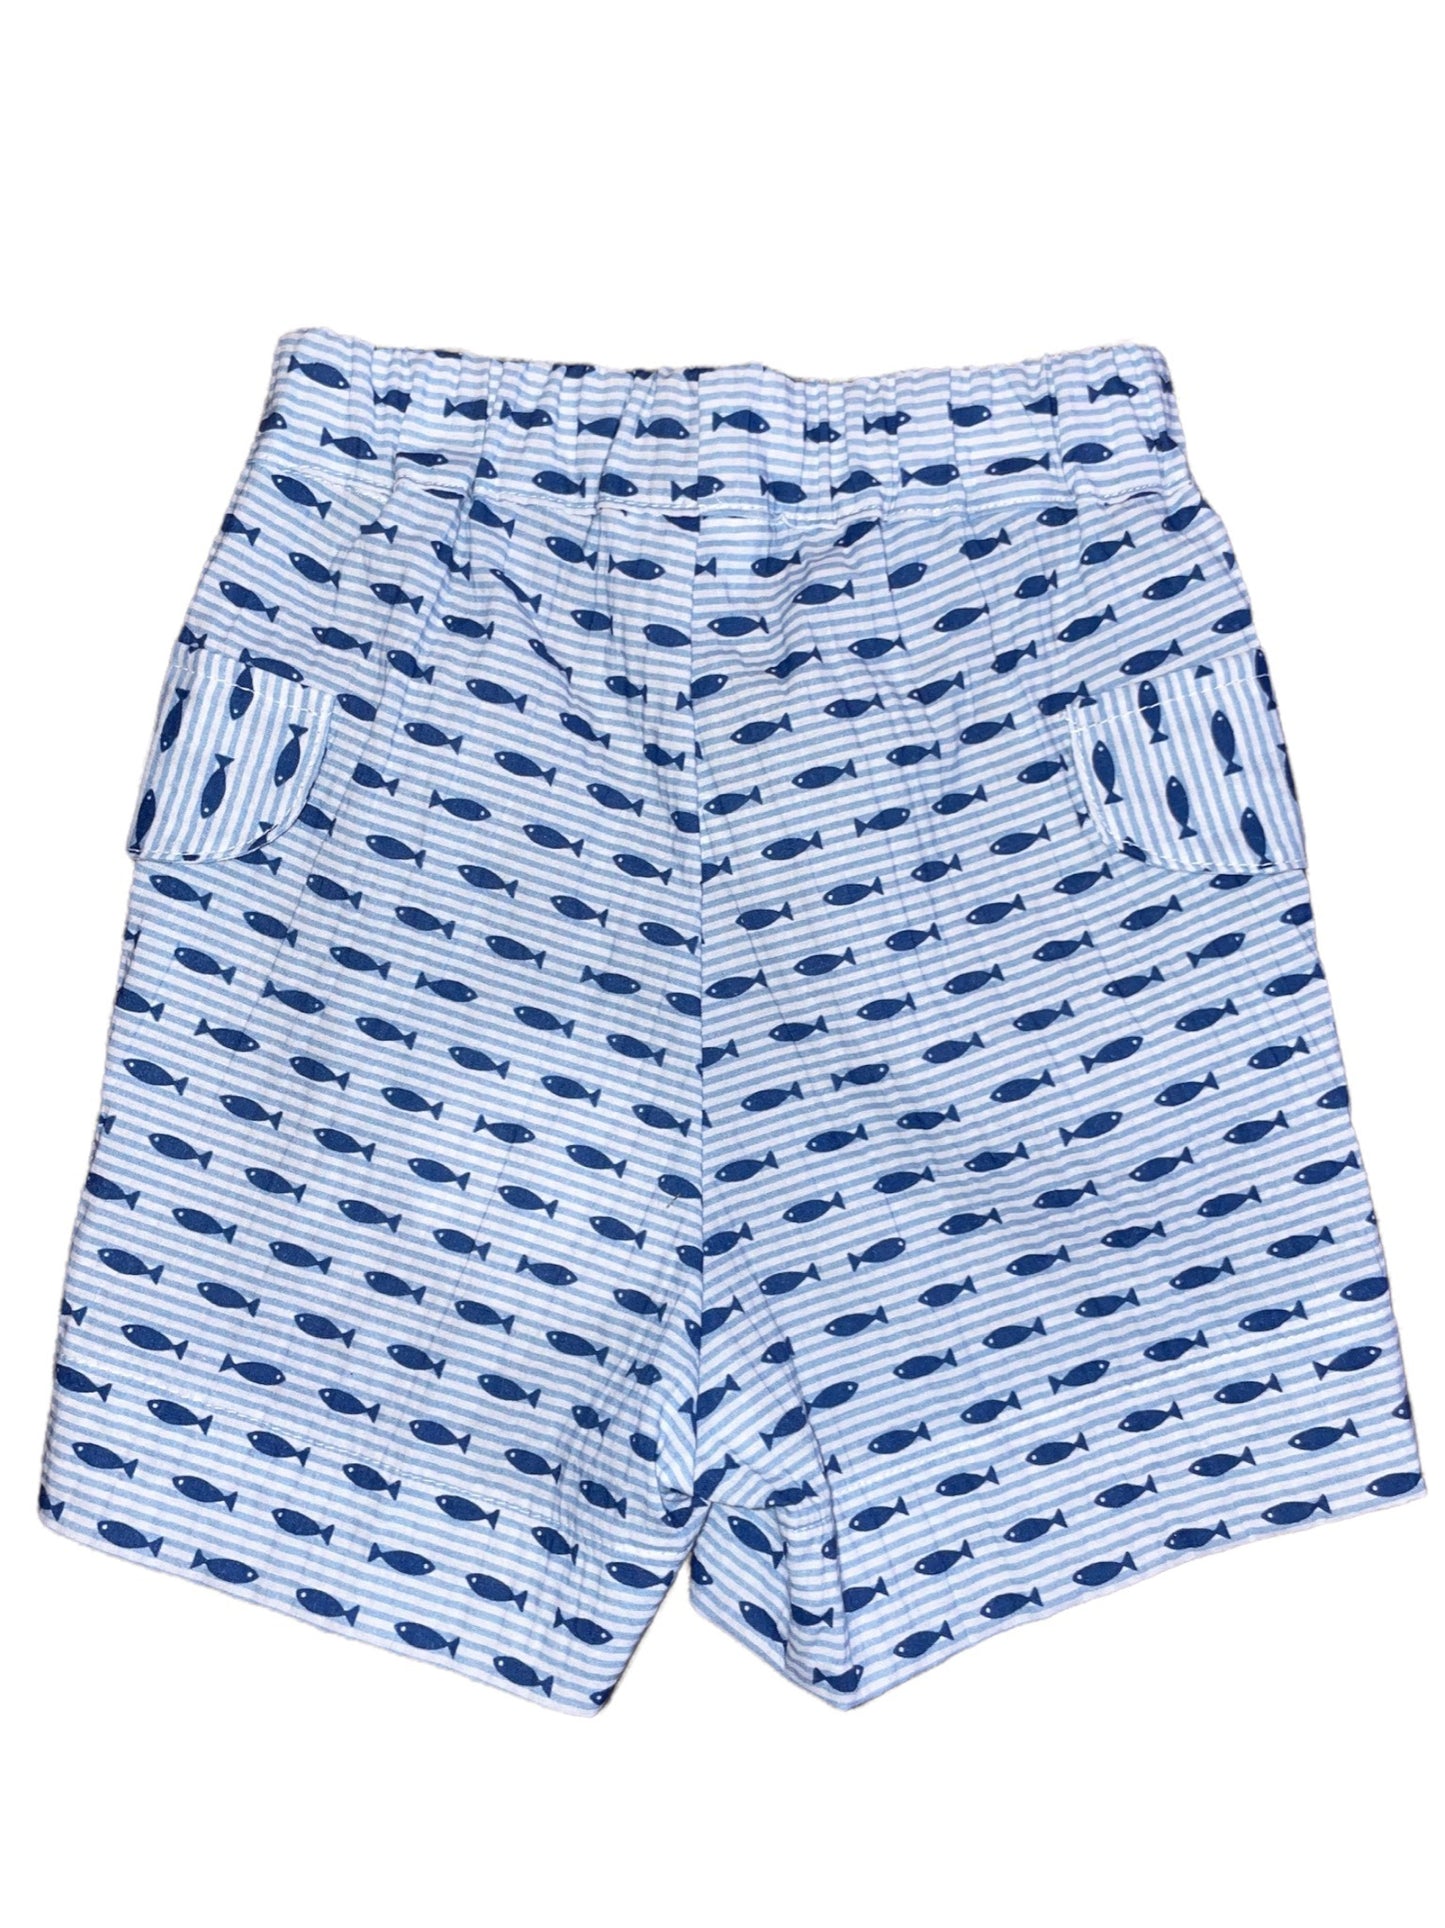 Baby Boy Shorts - Blue Fish